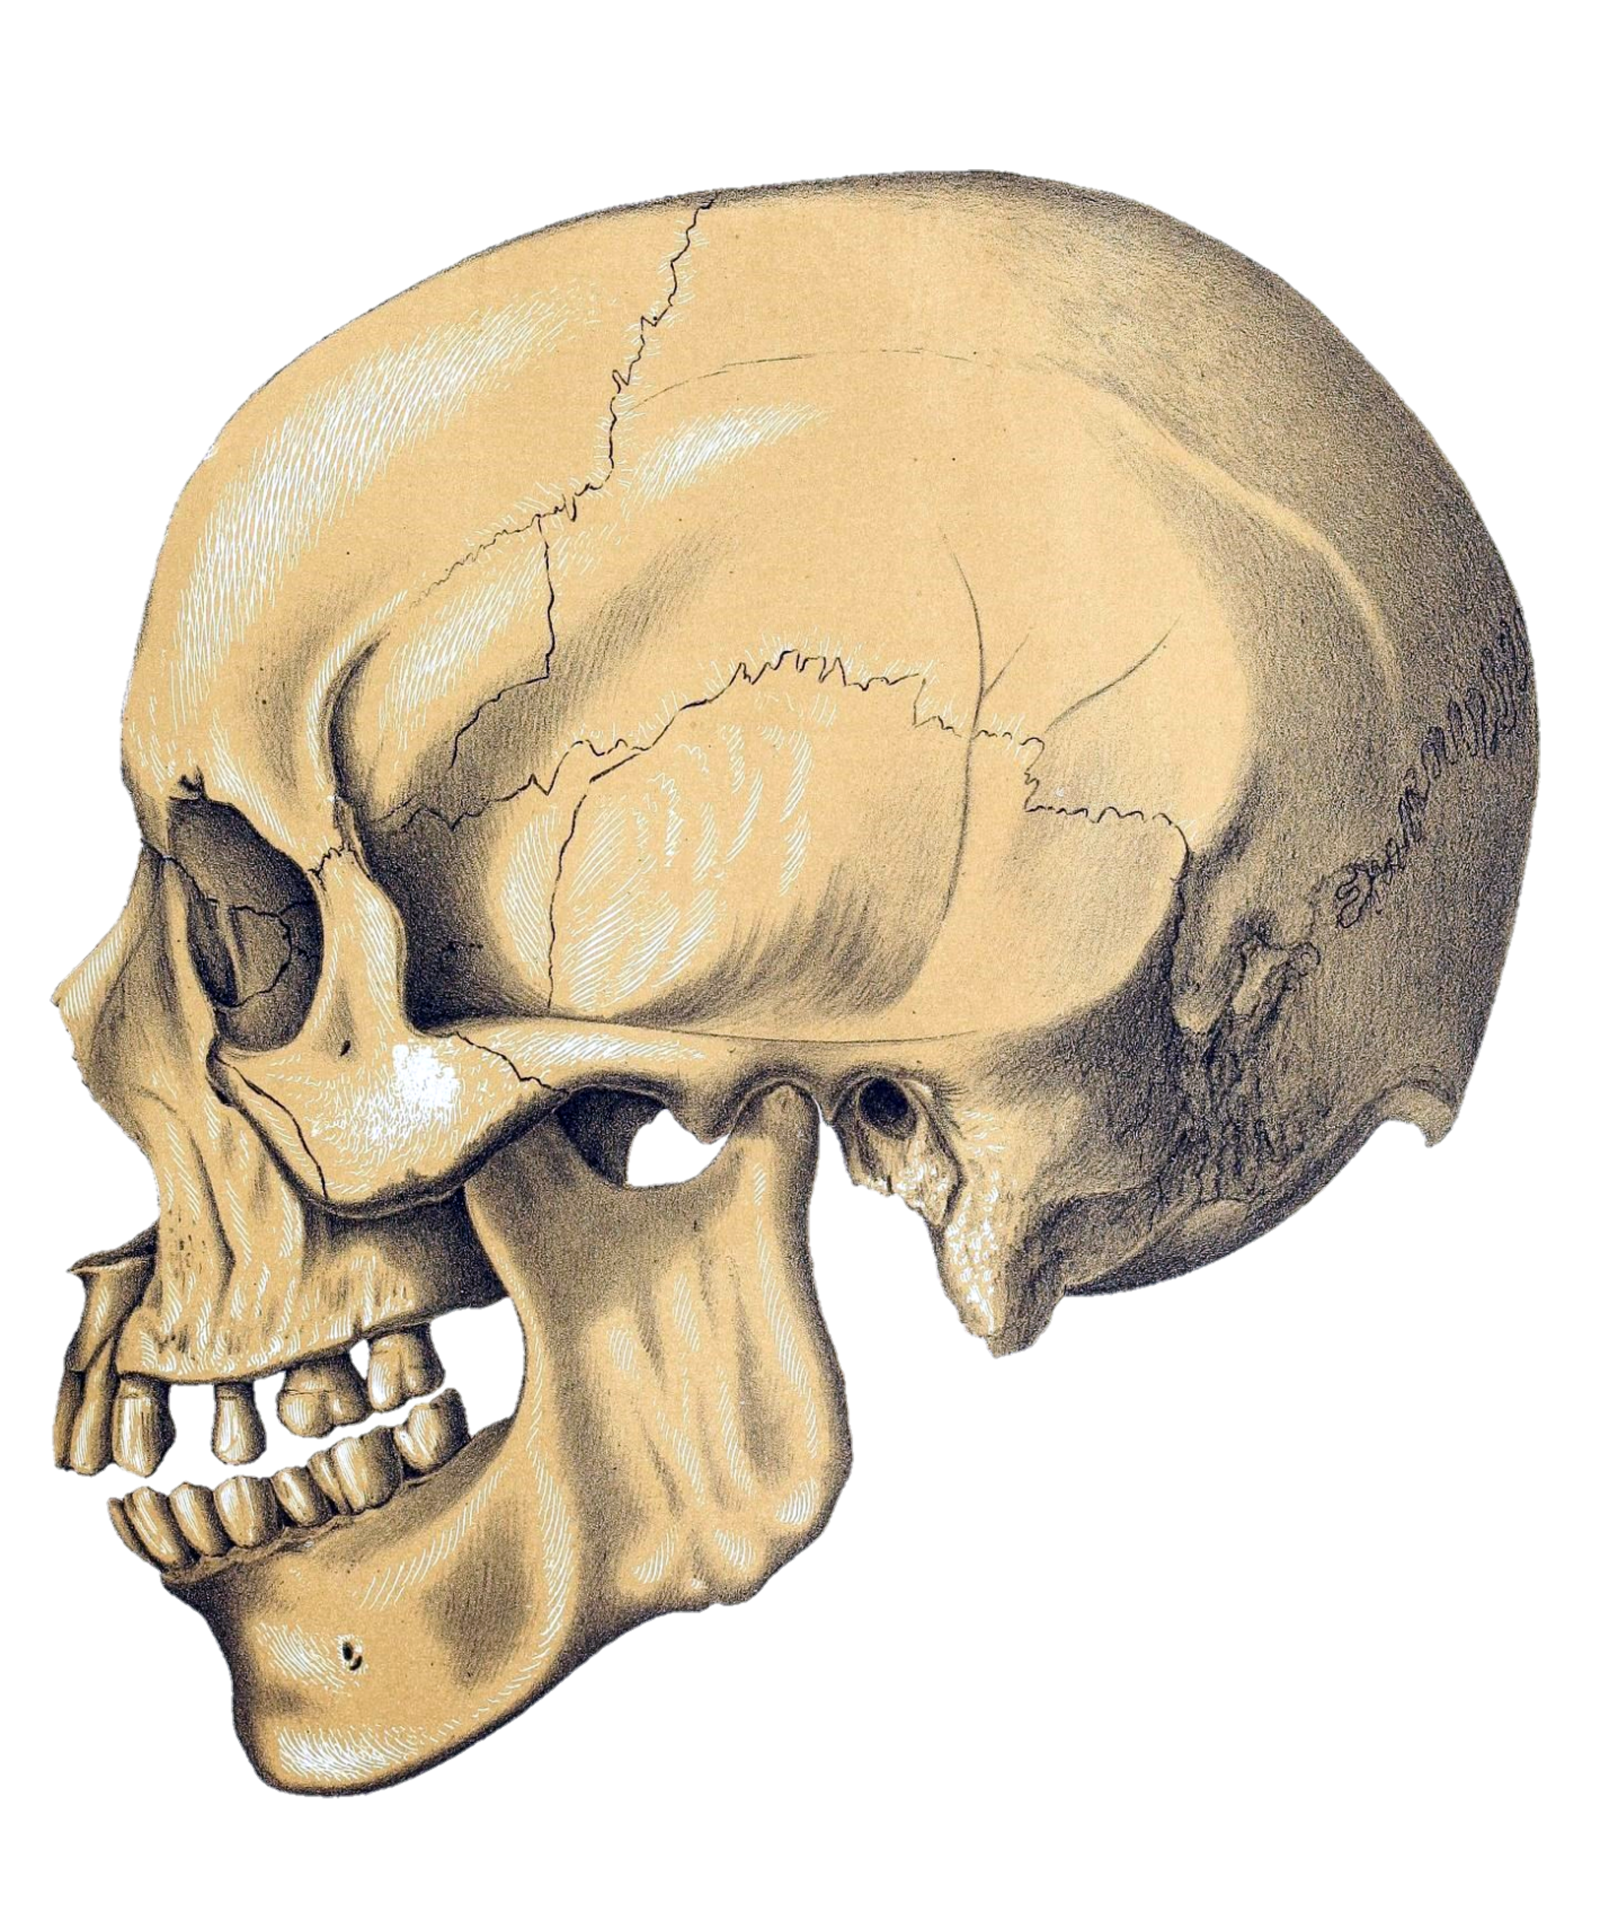 Skull anatomy vintage old art 1900 century novella antique human bones medicine painted